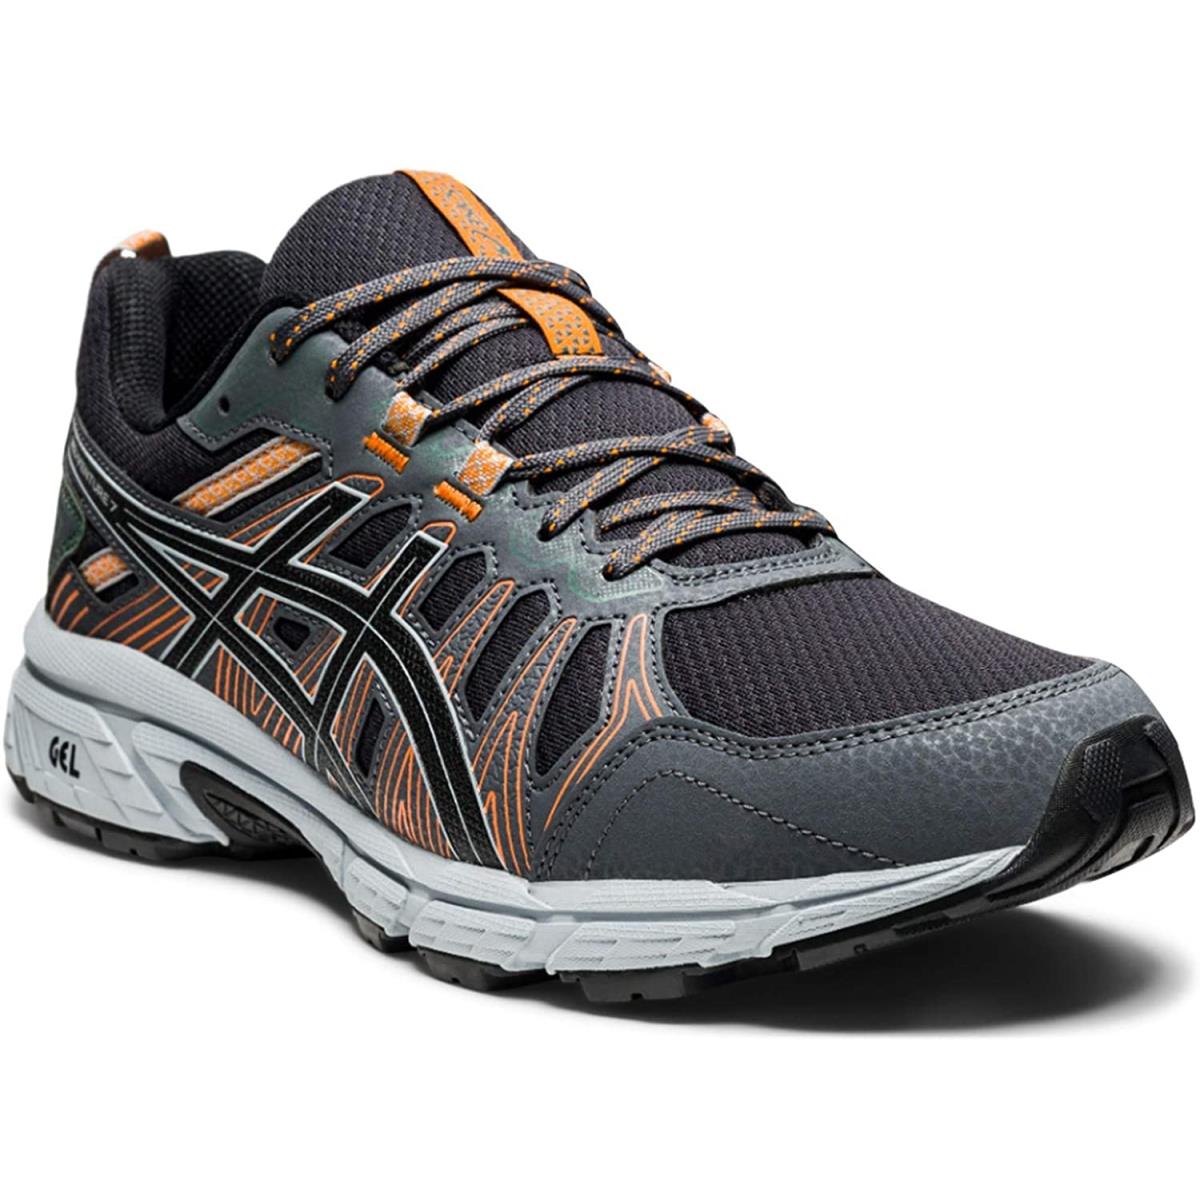 Asics Men`s Gel-venture 7 Trail Running Shoes Graphite Grey/Black